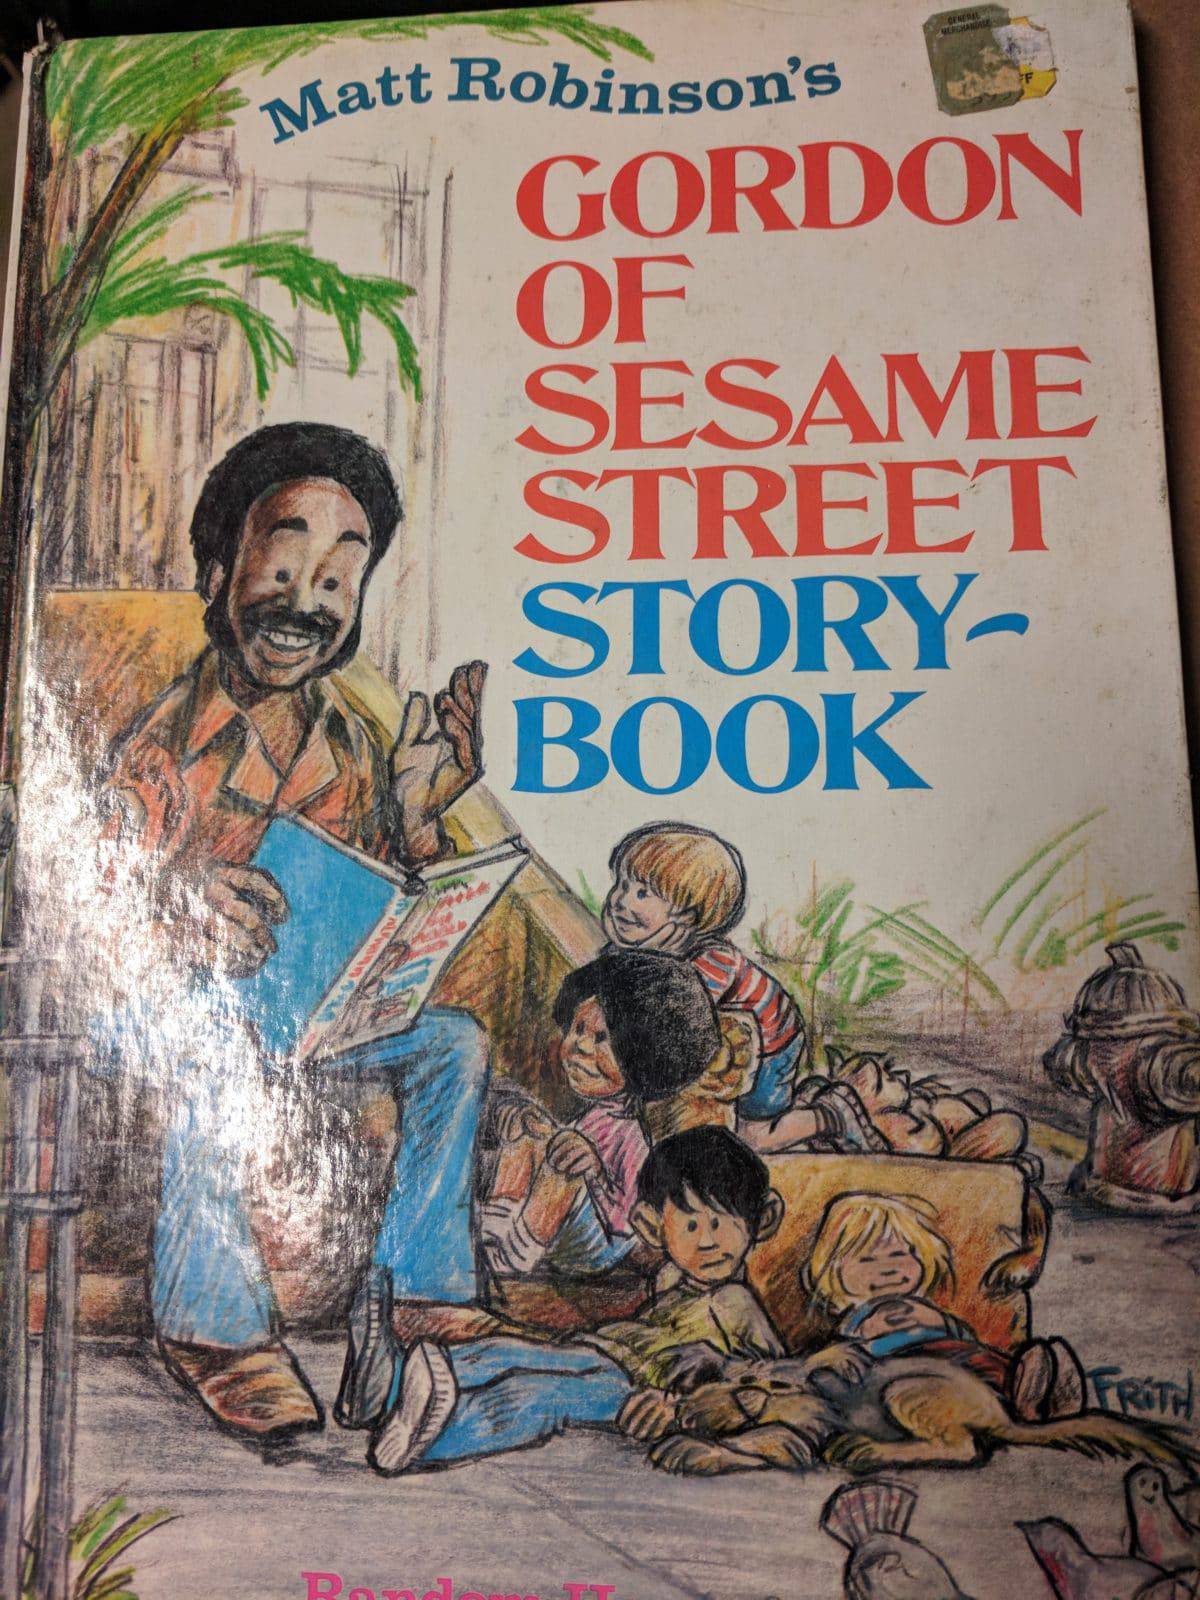 Sesame Street Books {Vintage Gordon Storybook}